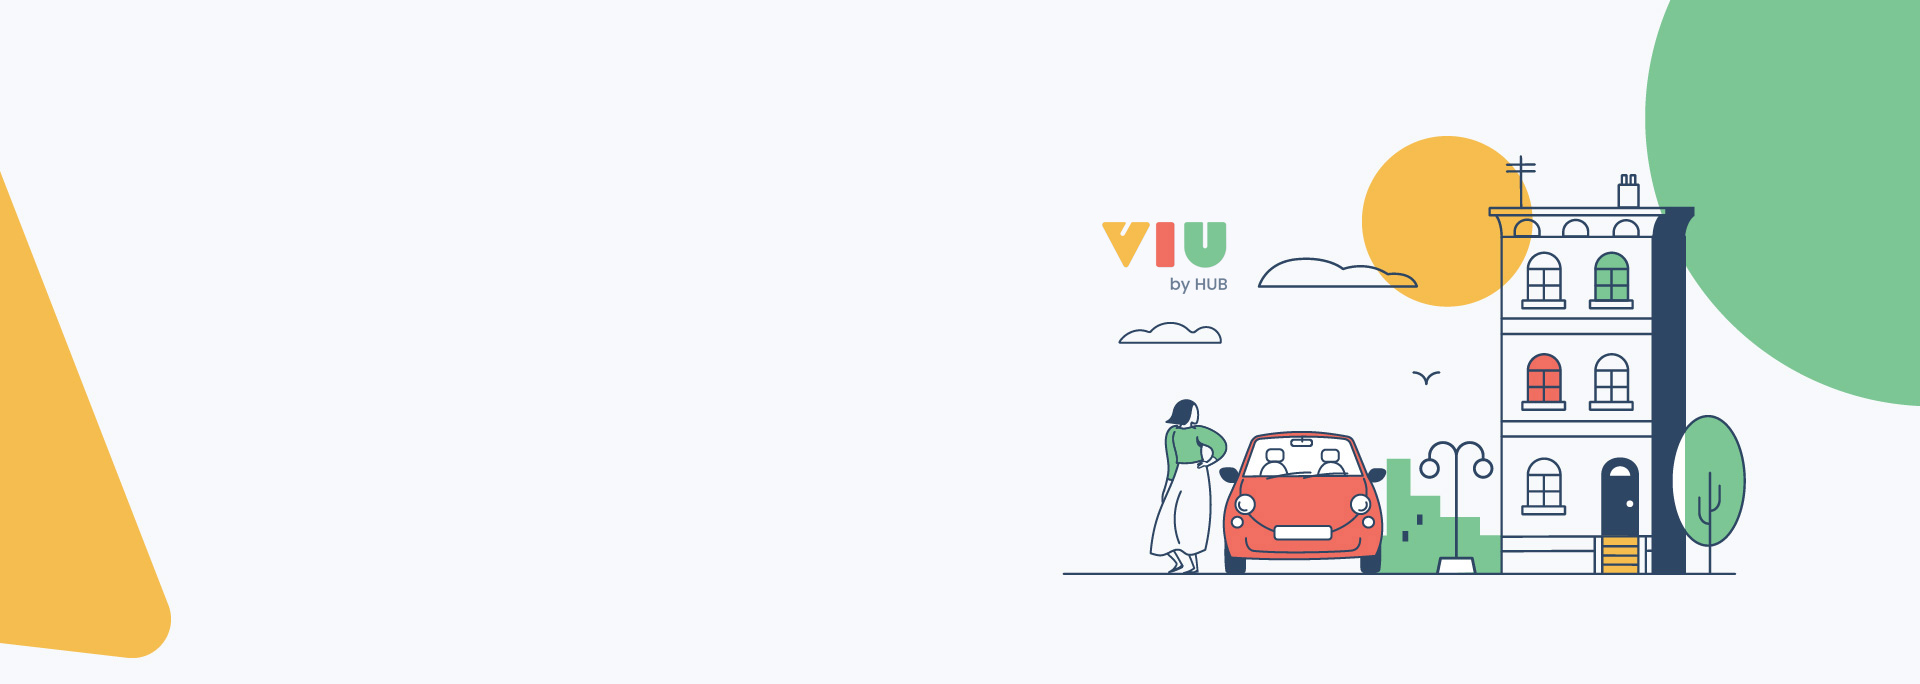 VIU by HUB is ASU's preferred insurance broker.